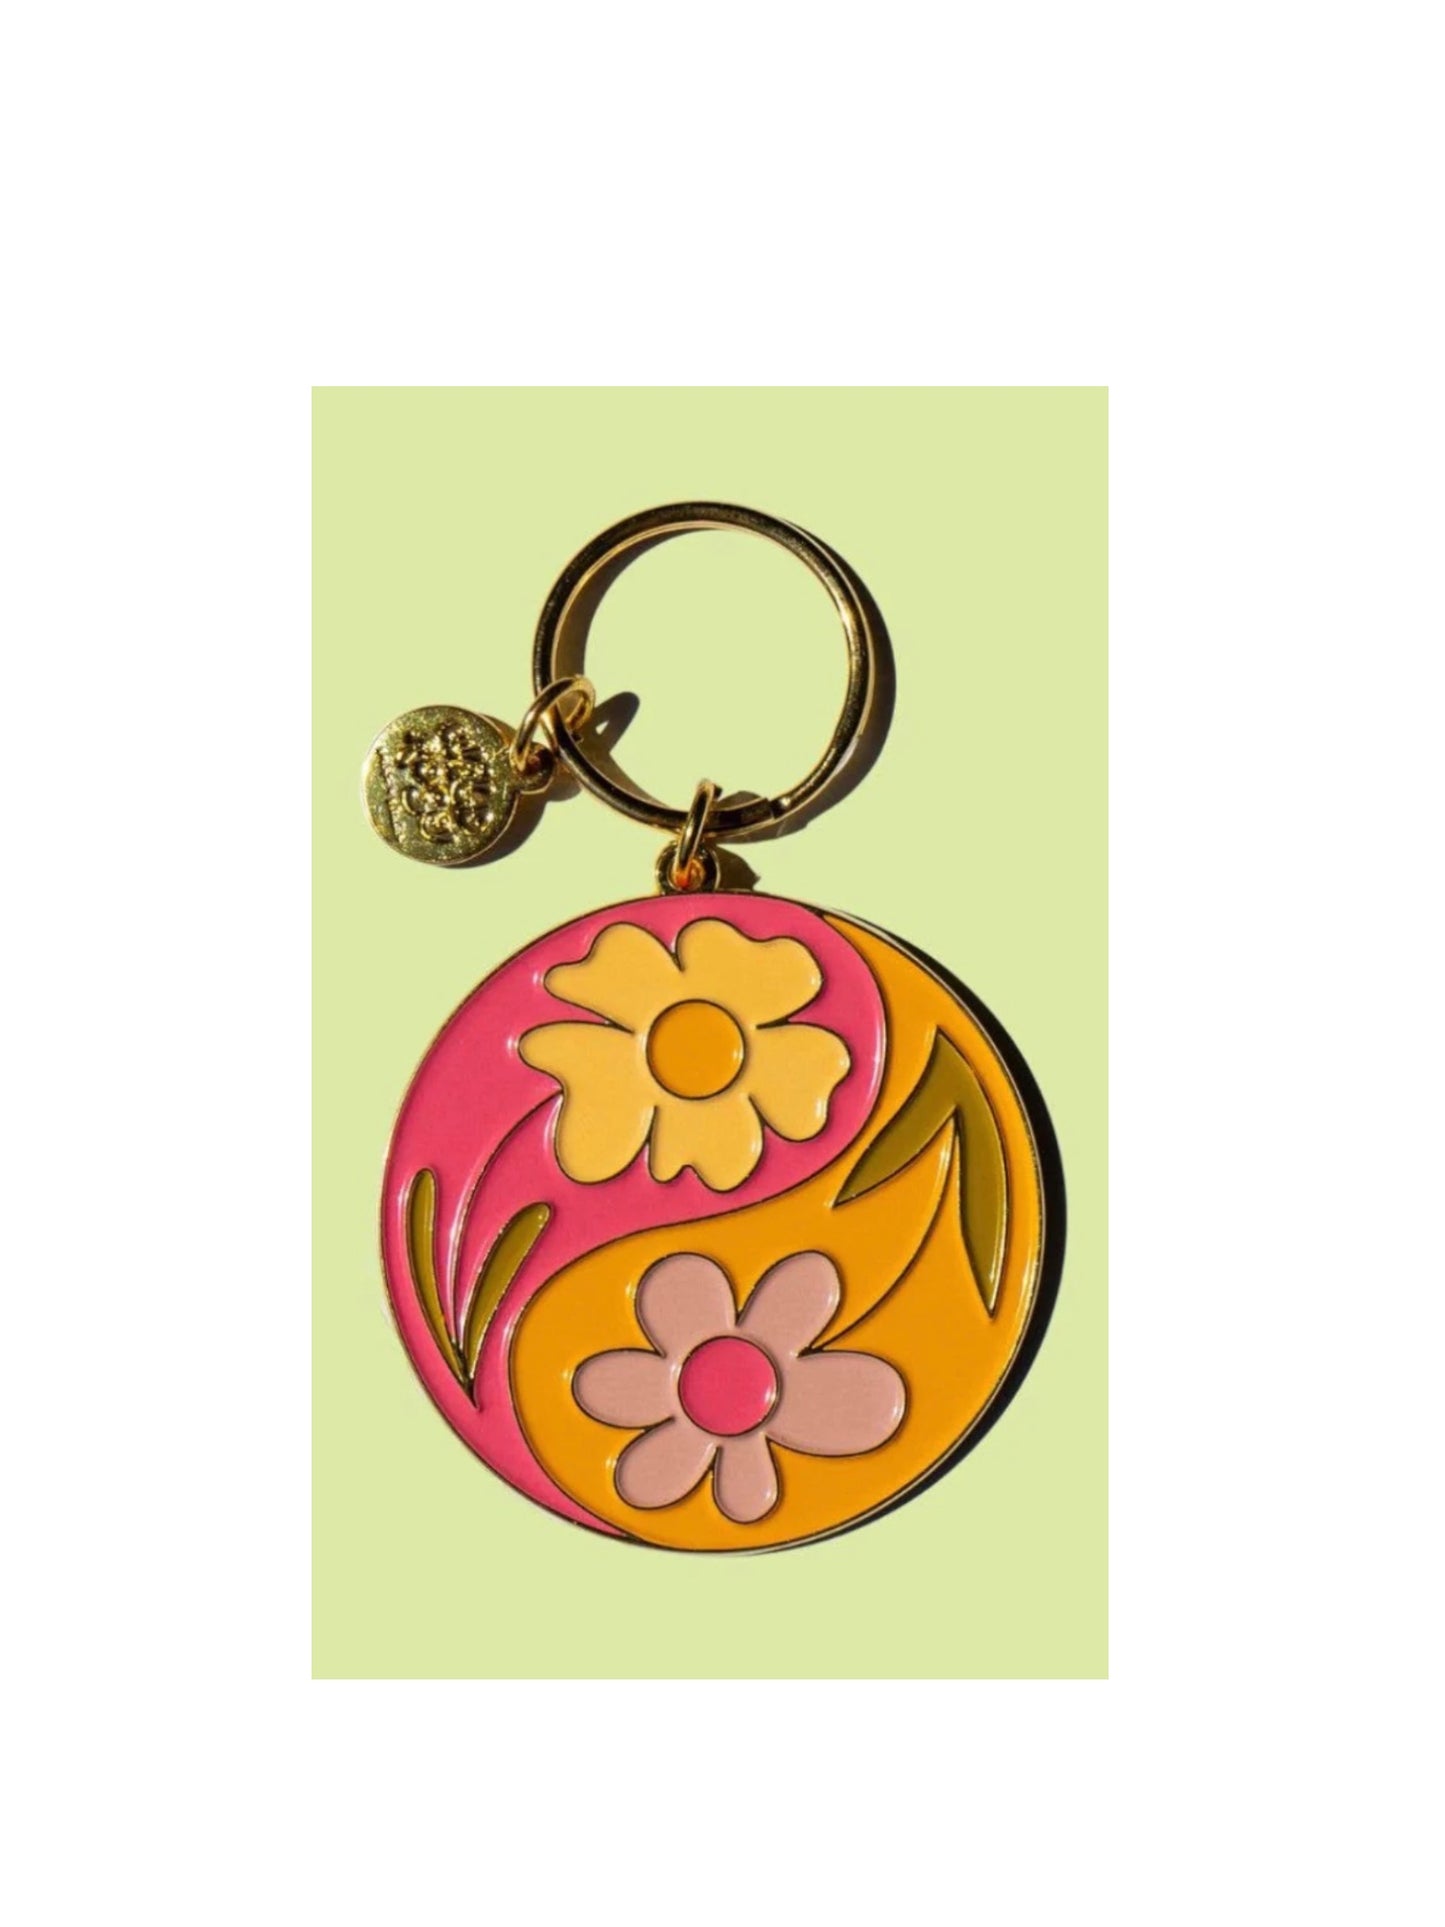 Yin Yang Floral Keychain